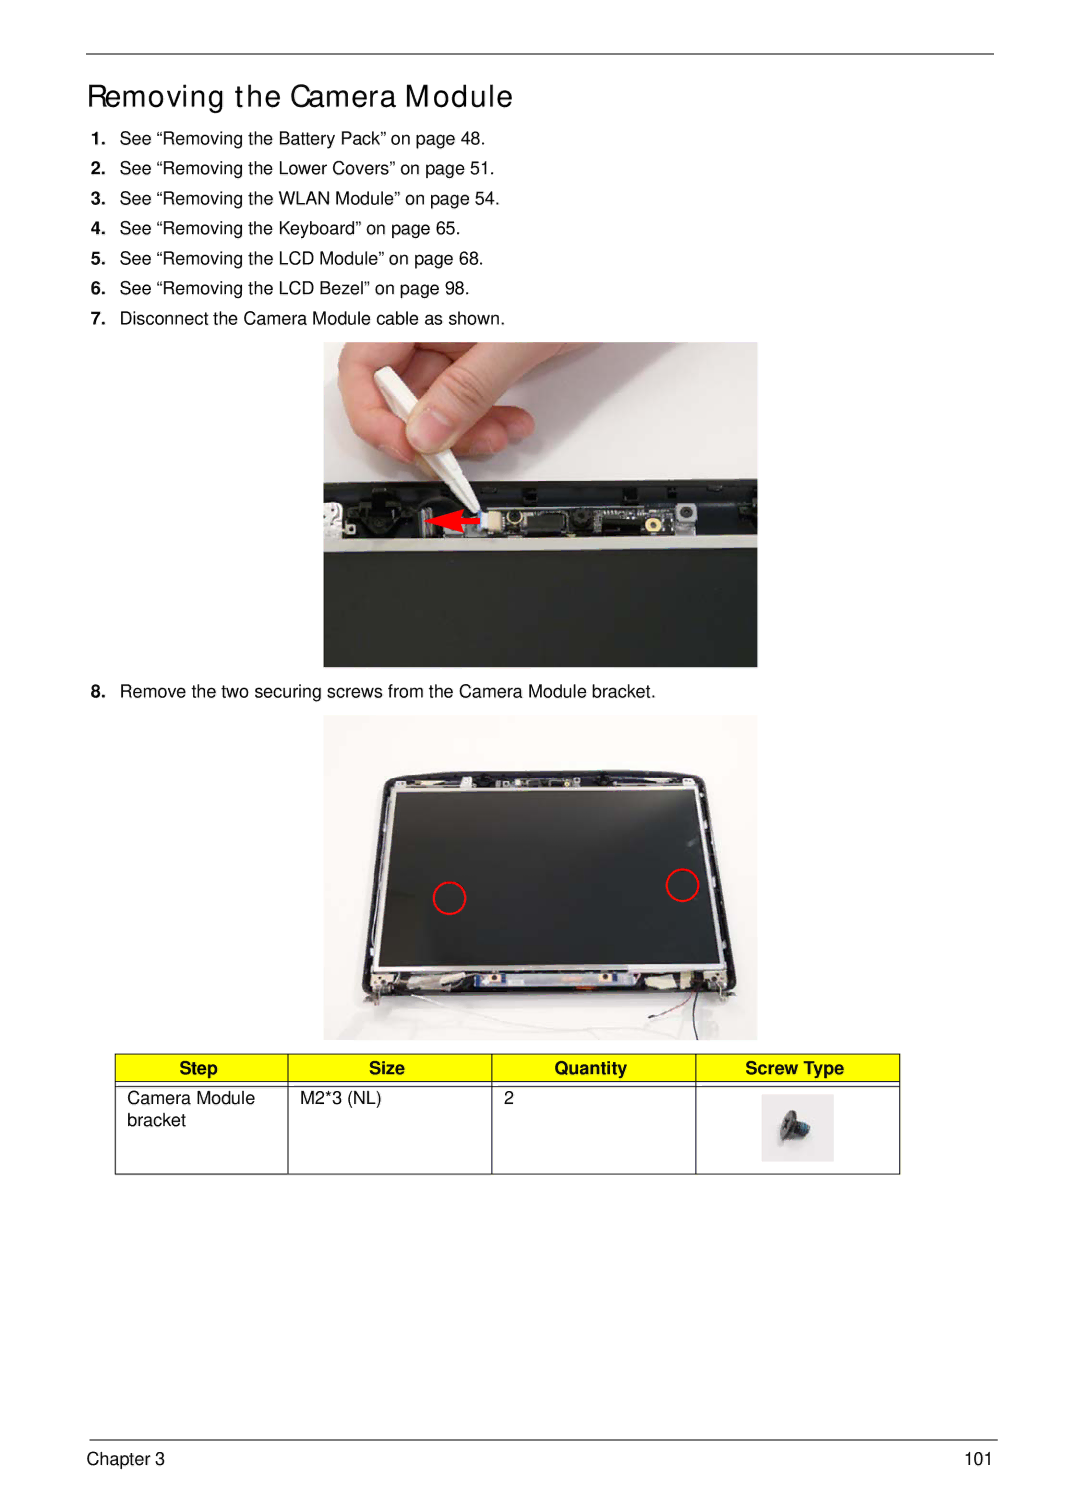 Acer 5530G manual Removing the Camera Module, Step Size Quantity Screw Type Camera Module M2*3 NL Bracket 